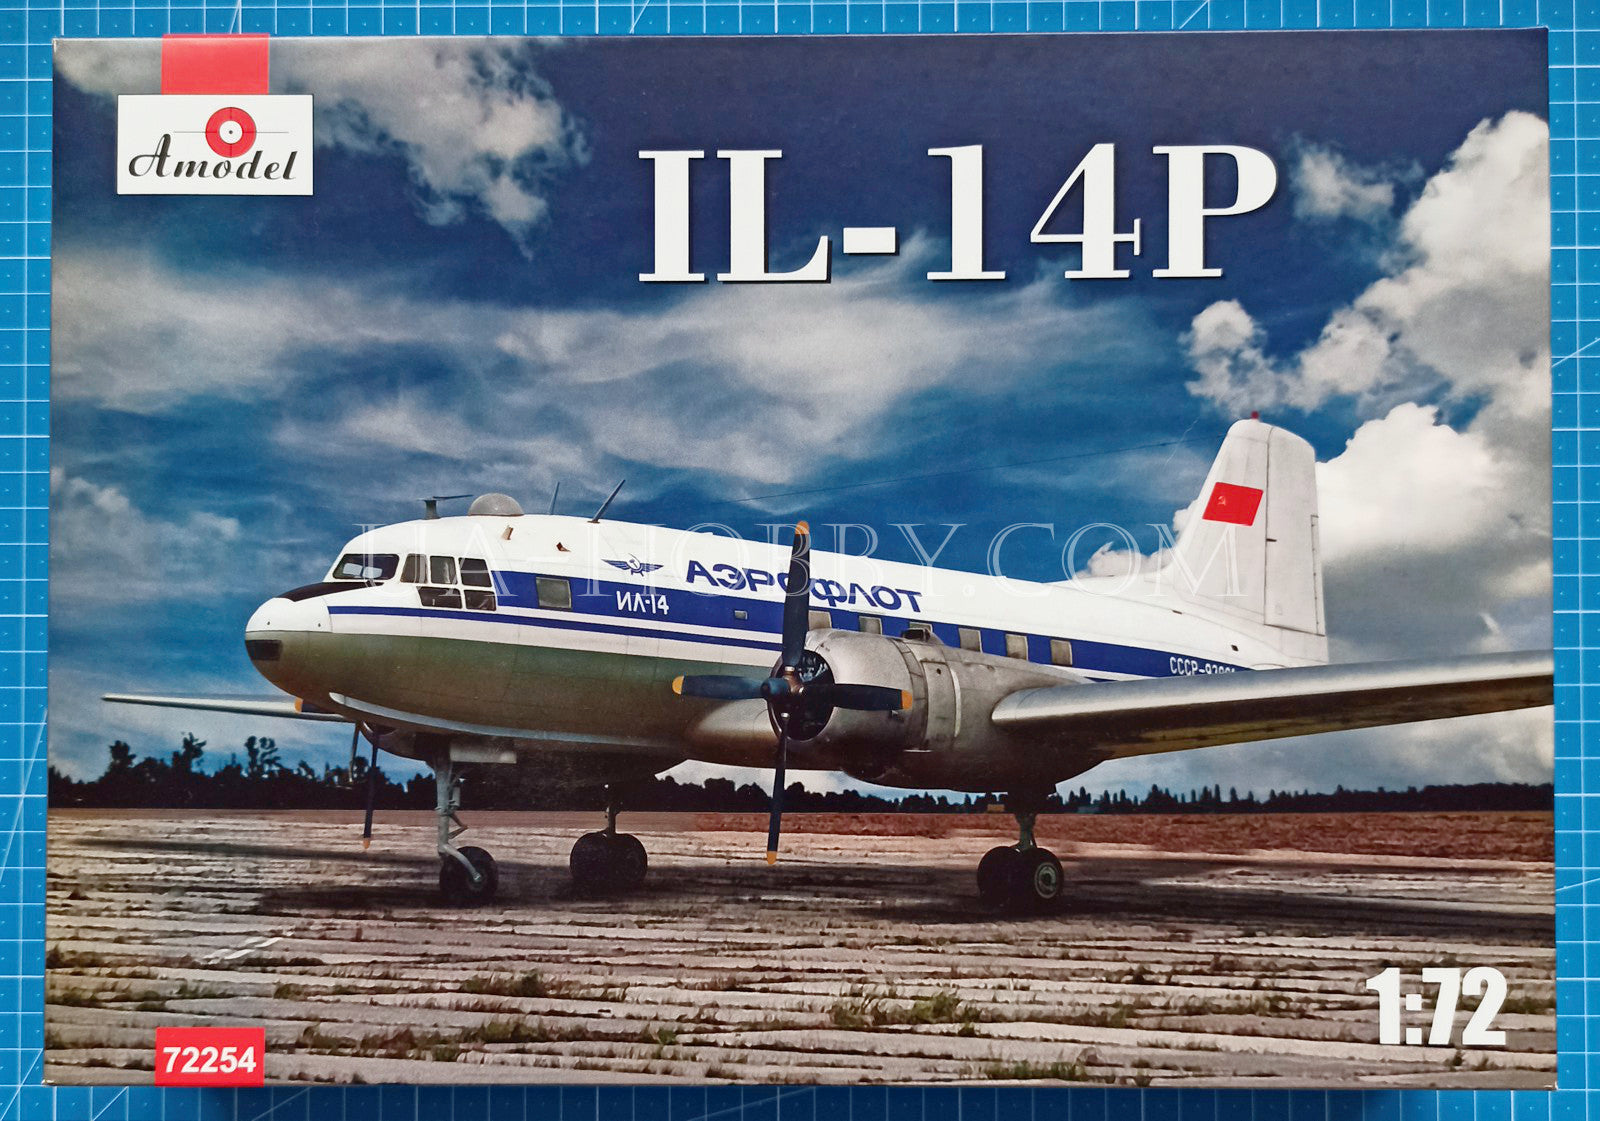 1/72 Il-14P. Amodel 72254